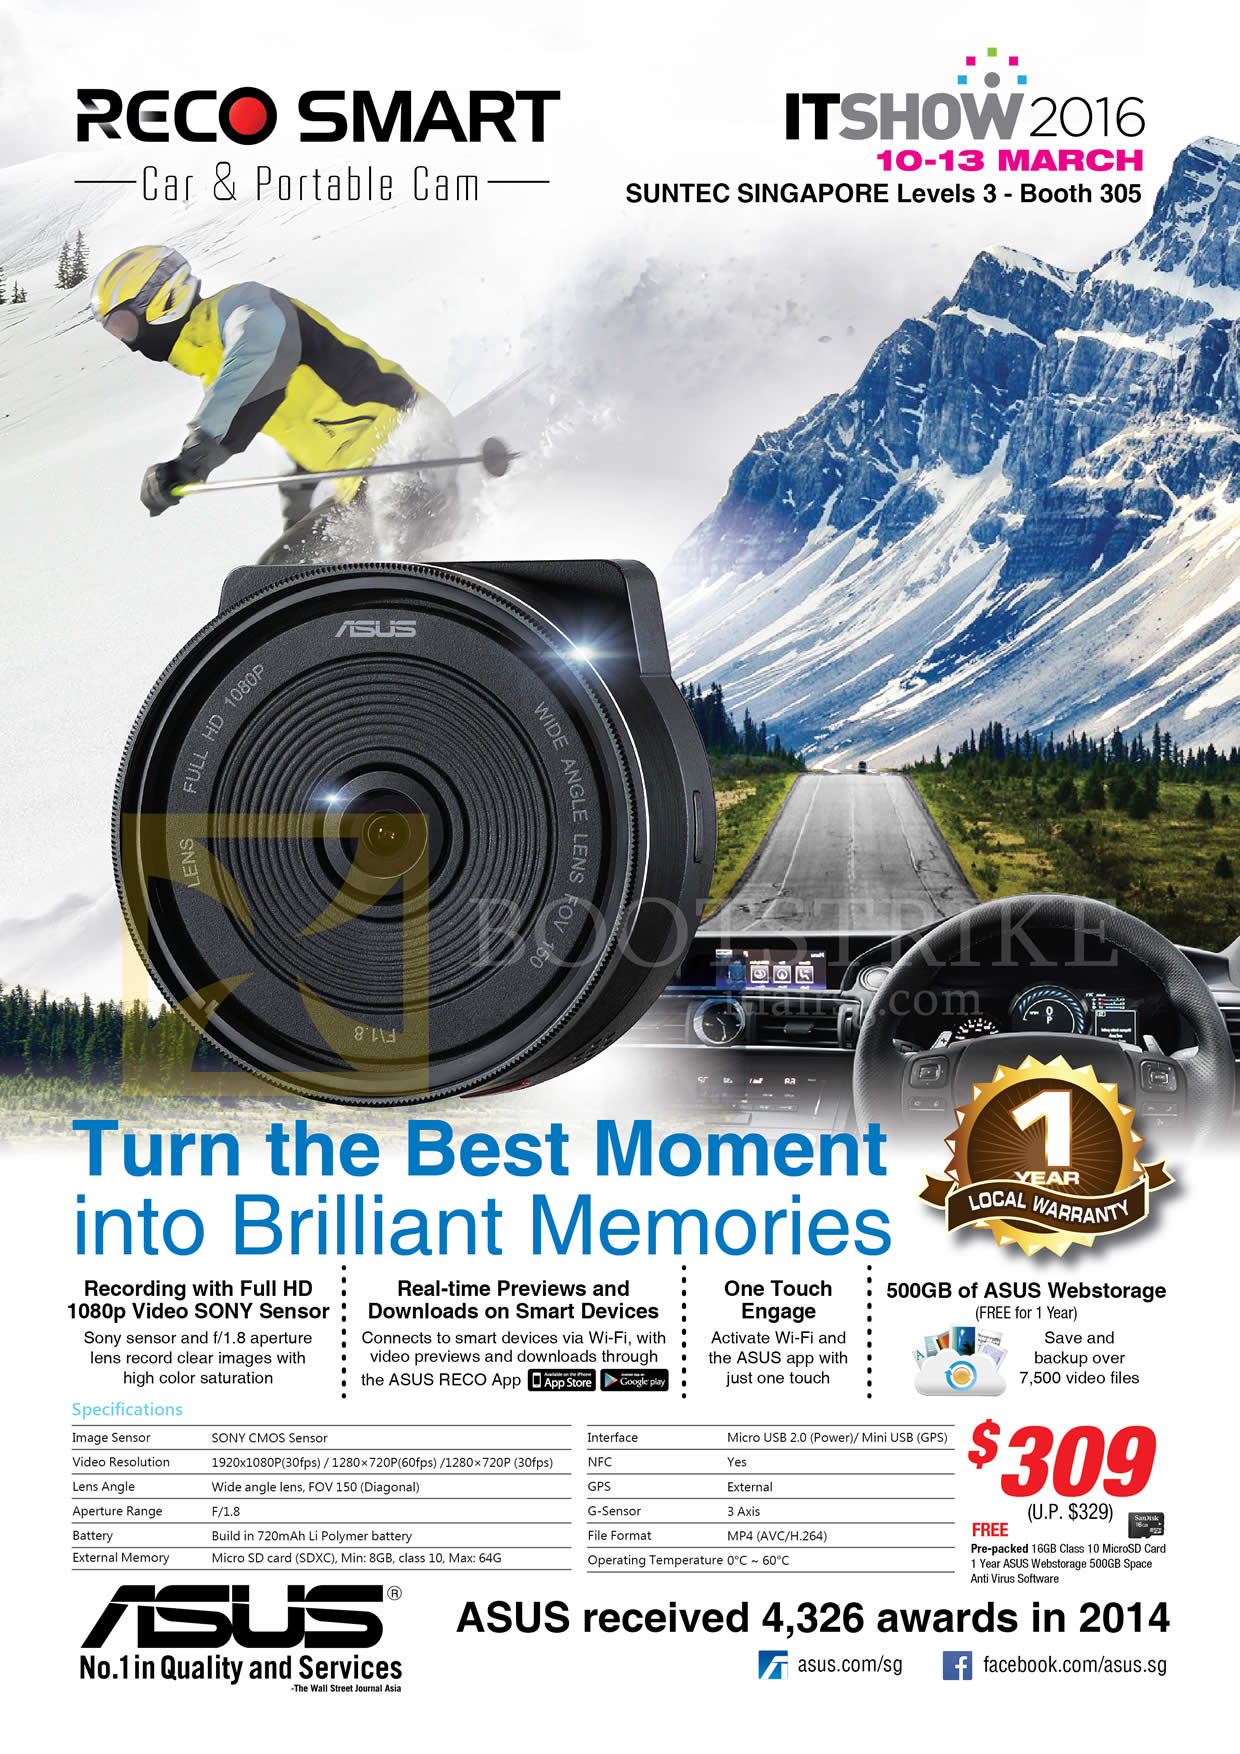 IT SHOW 2016 price list image brochure of ASUS RECO Smart Car Portable Cam